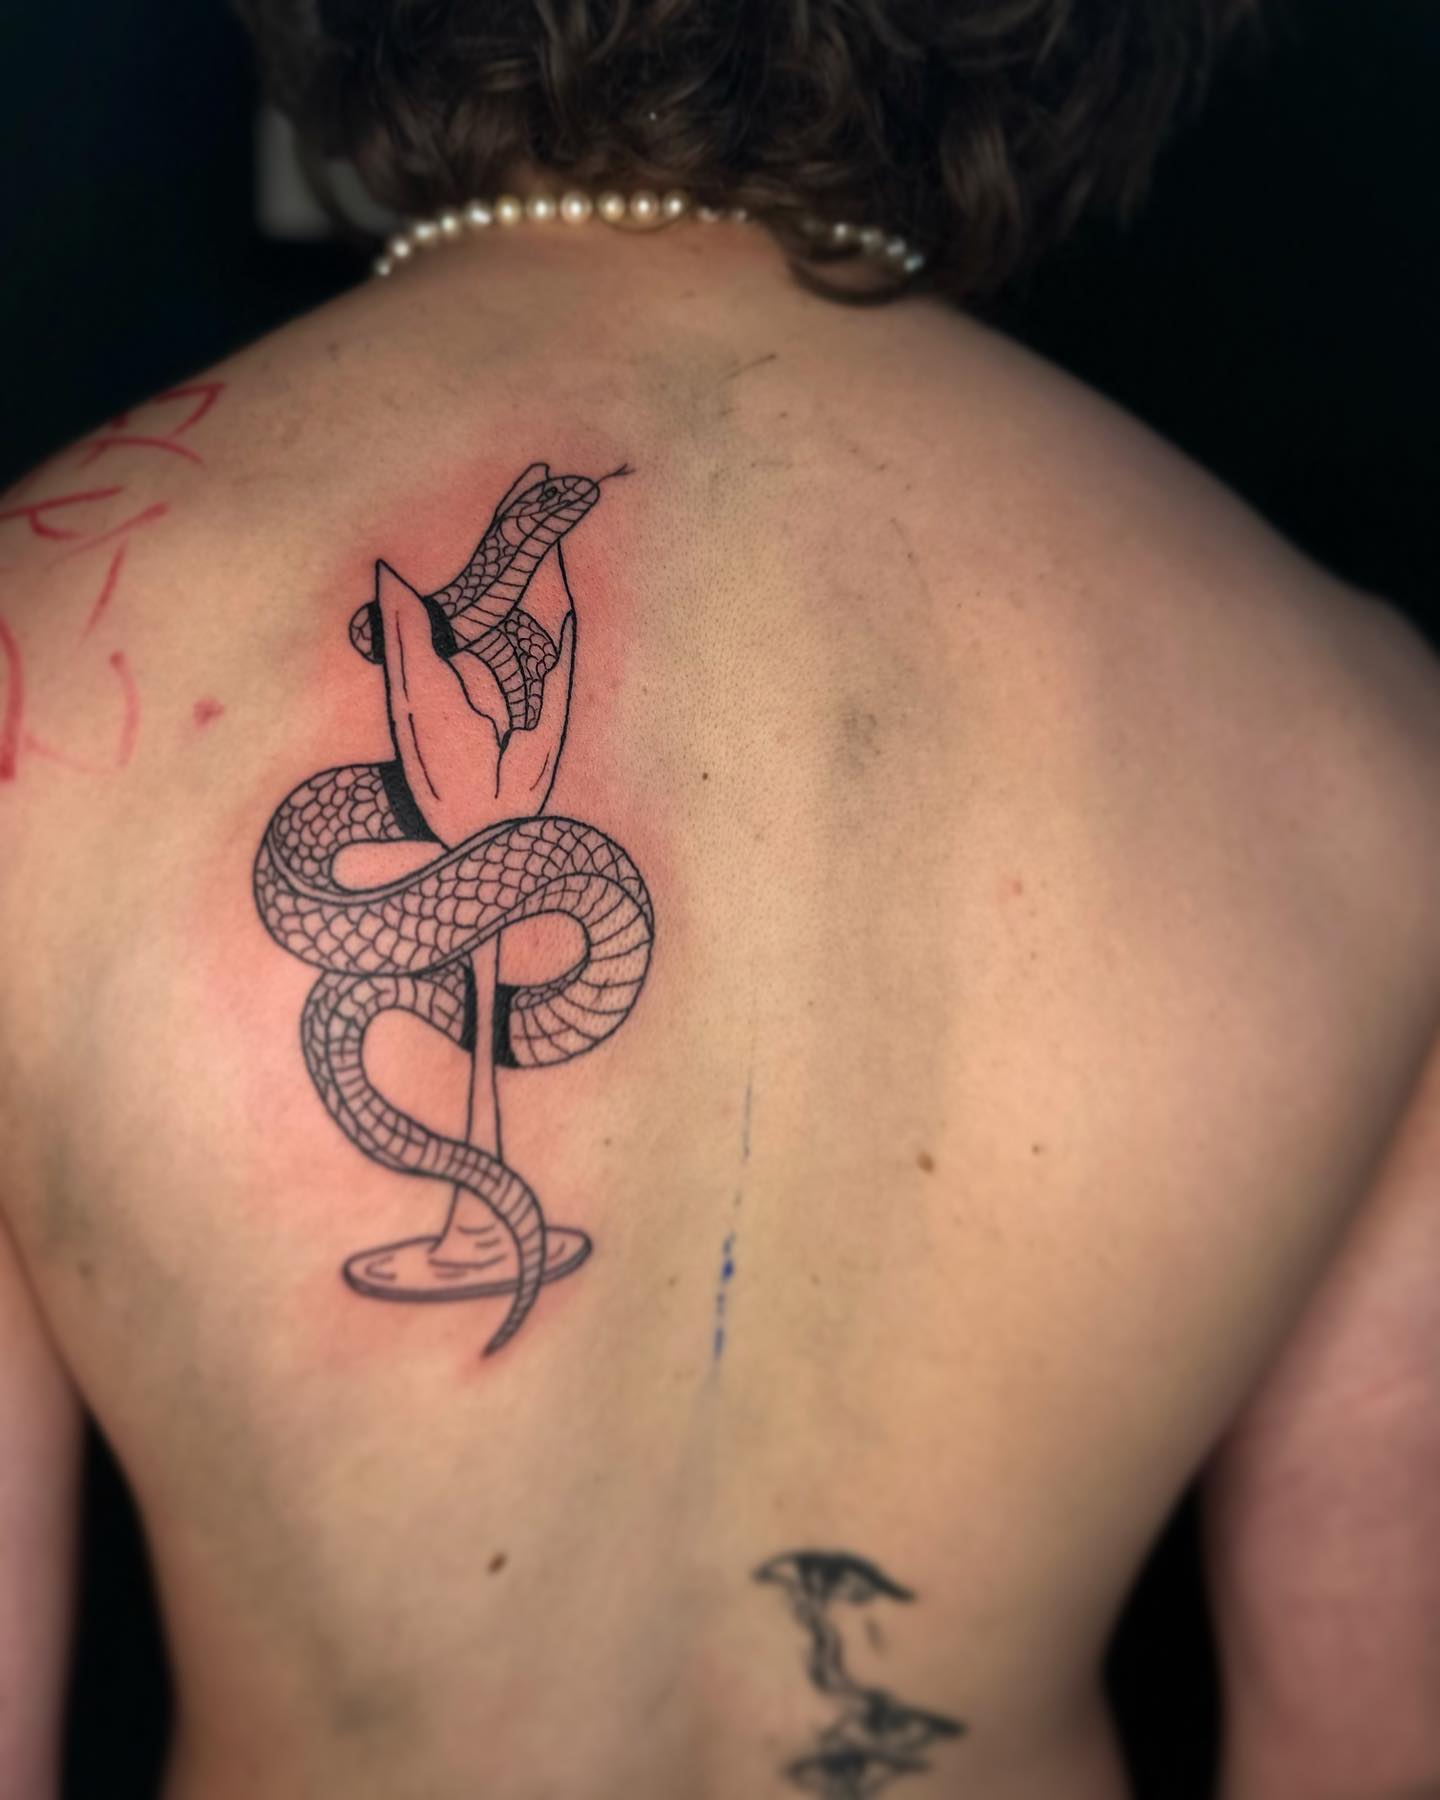 Snake  
Thank you 
.
.
#snake #snaketattoo #tattoo #tattoos #tattooartist #tatto